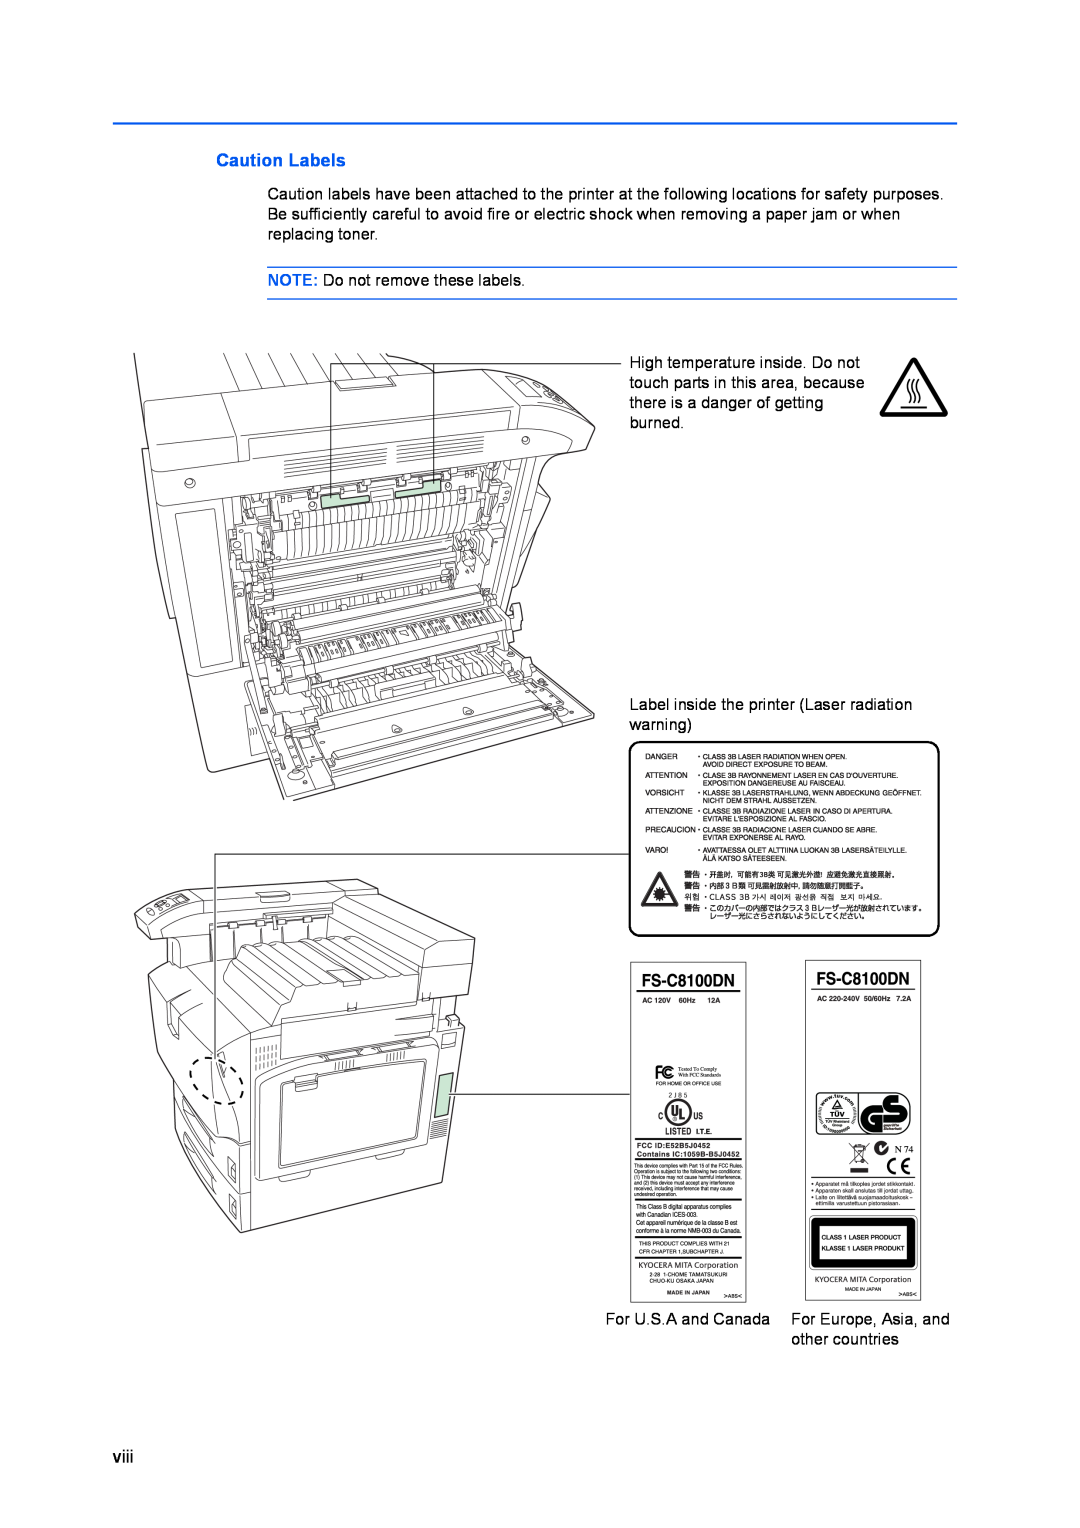 Kyocera FS-C8100DN manual Caution Labels, viii 